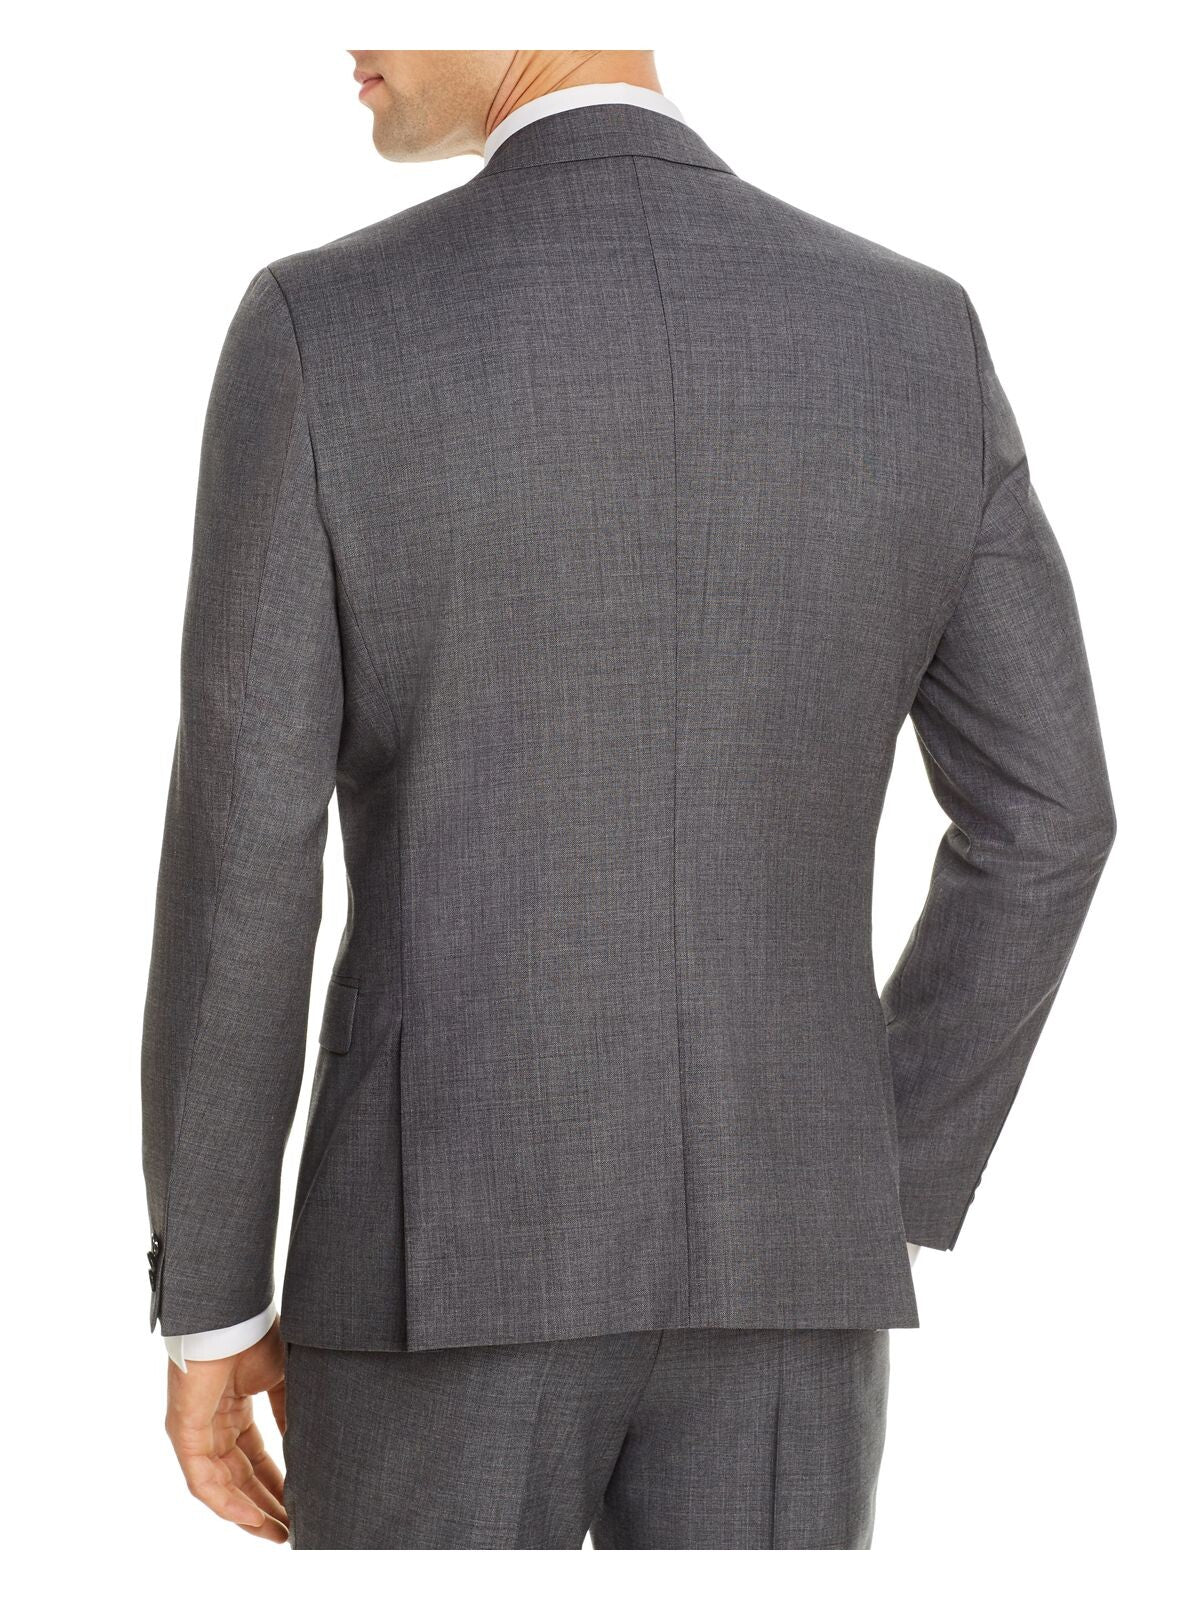 HUGO BOSS Mens Arti Sharkskin Gray Single Breasted, Extra Slim Fit Wool Blend Suit Separate Blazer Jacket 40L